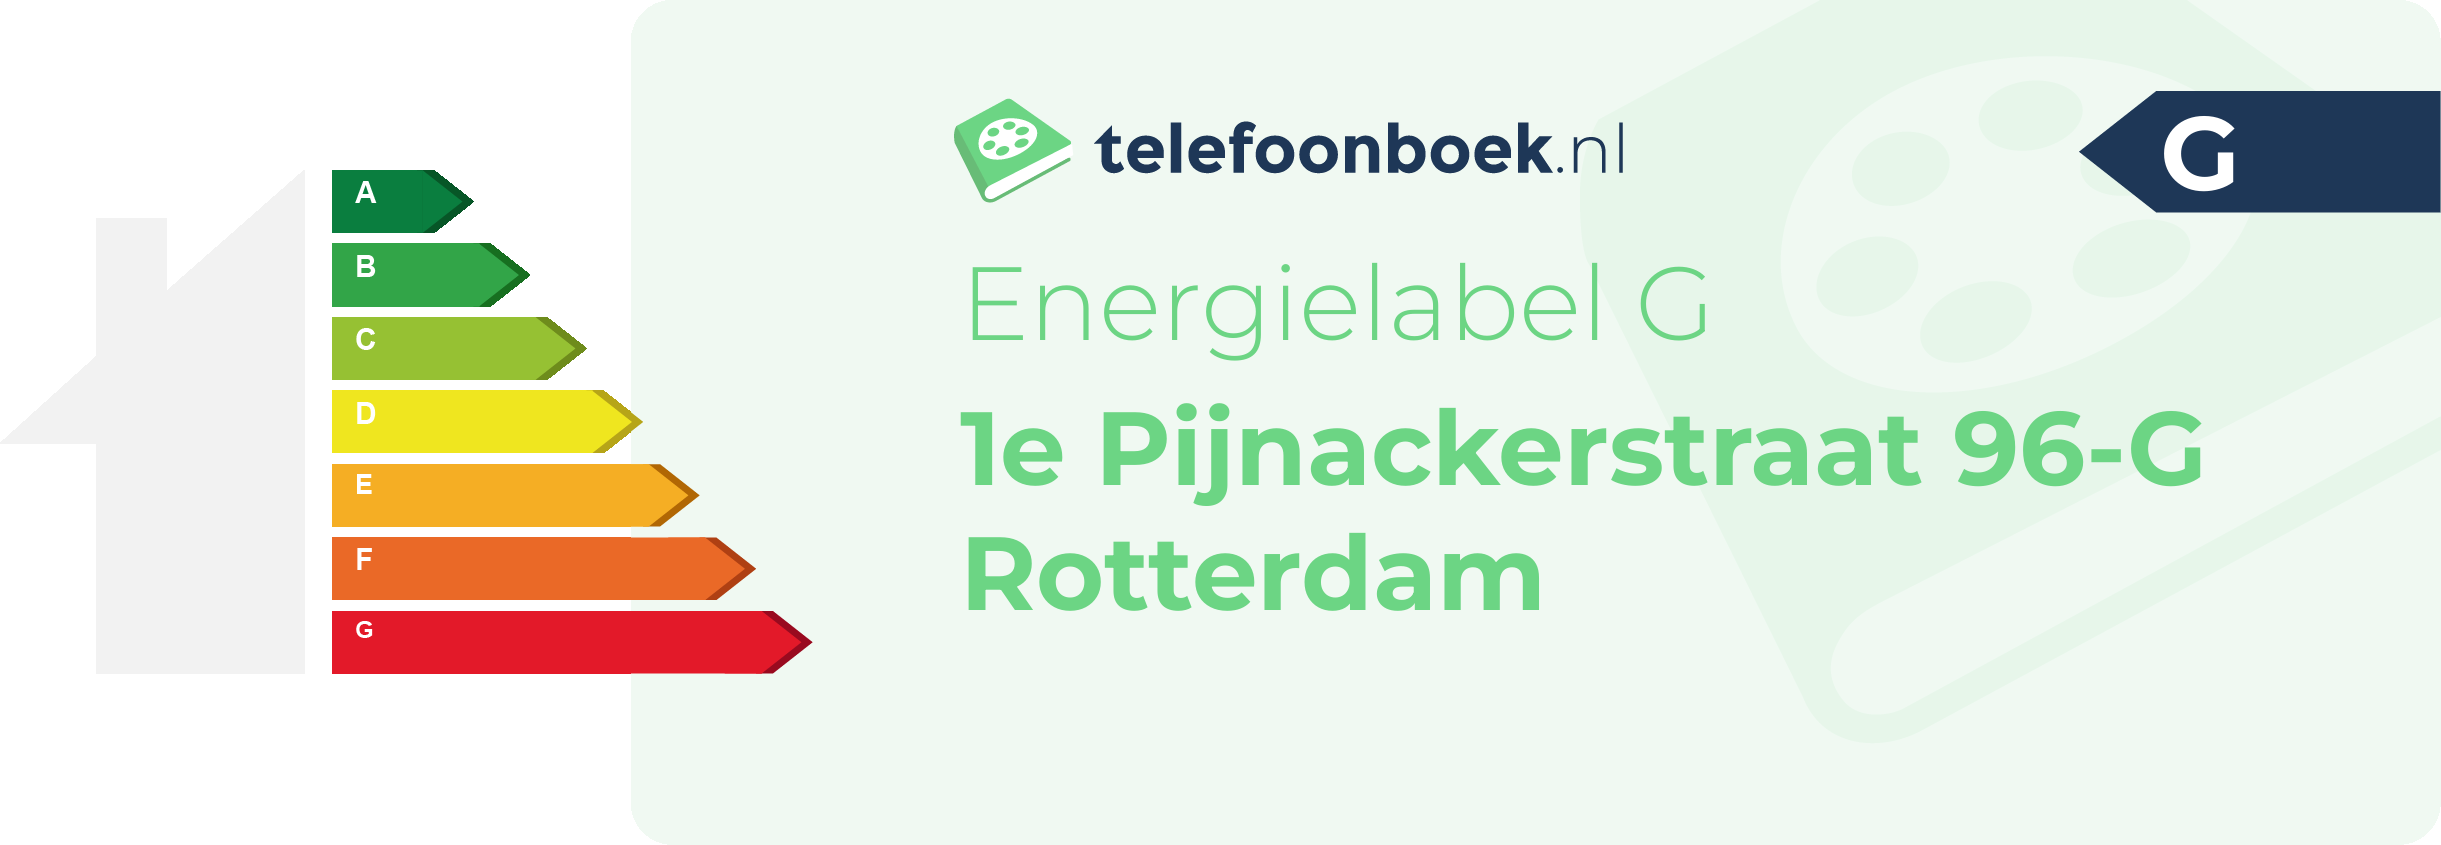 Energielabel 1e Pijnackerstraat 96-G Rotterdam